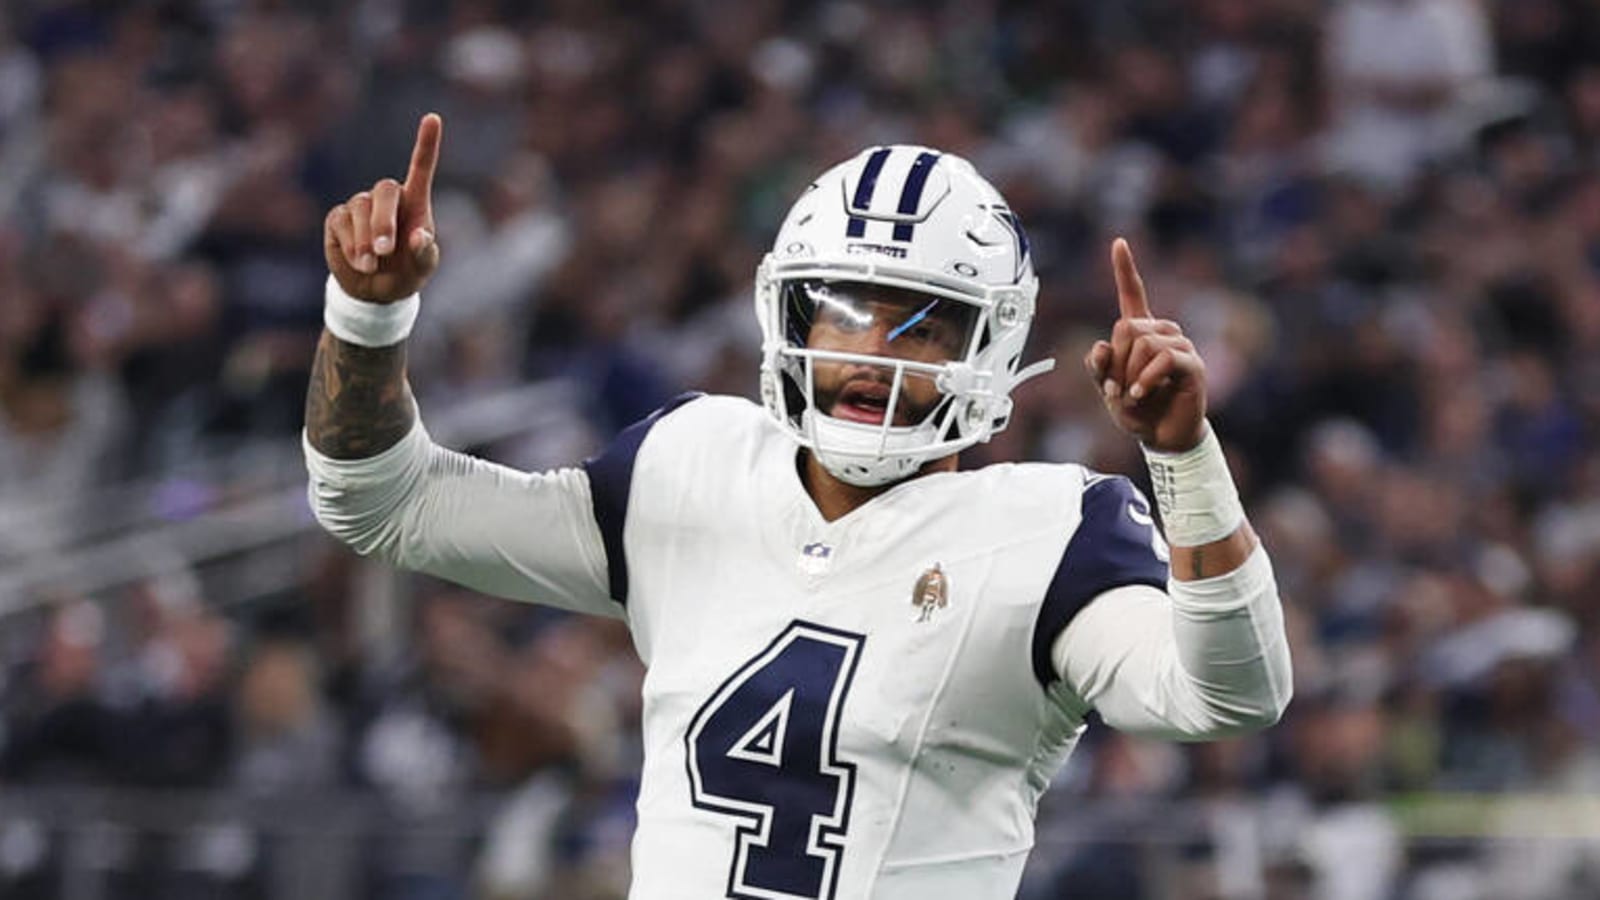 'SNF' takeaways: Cowboys post statement behind MVP game from Prescott